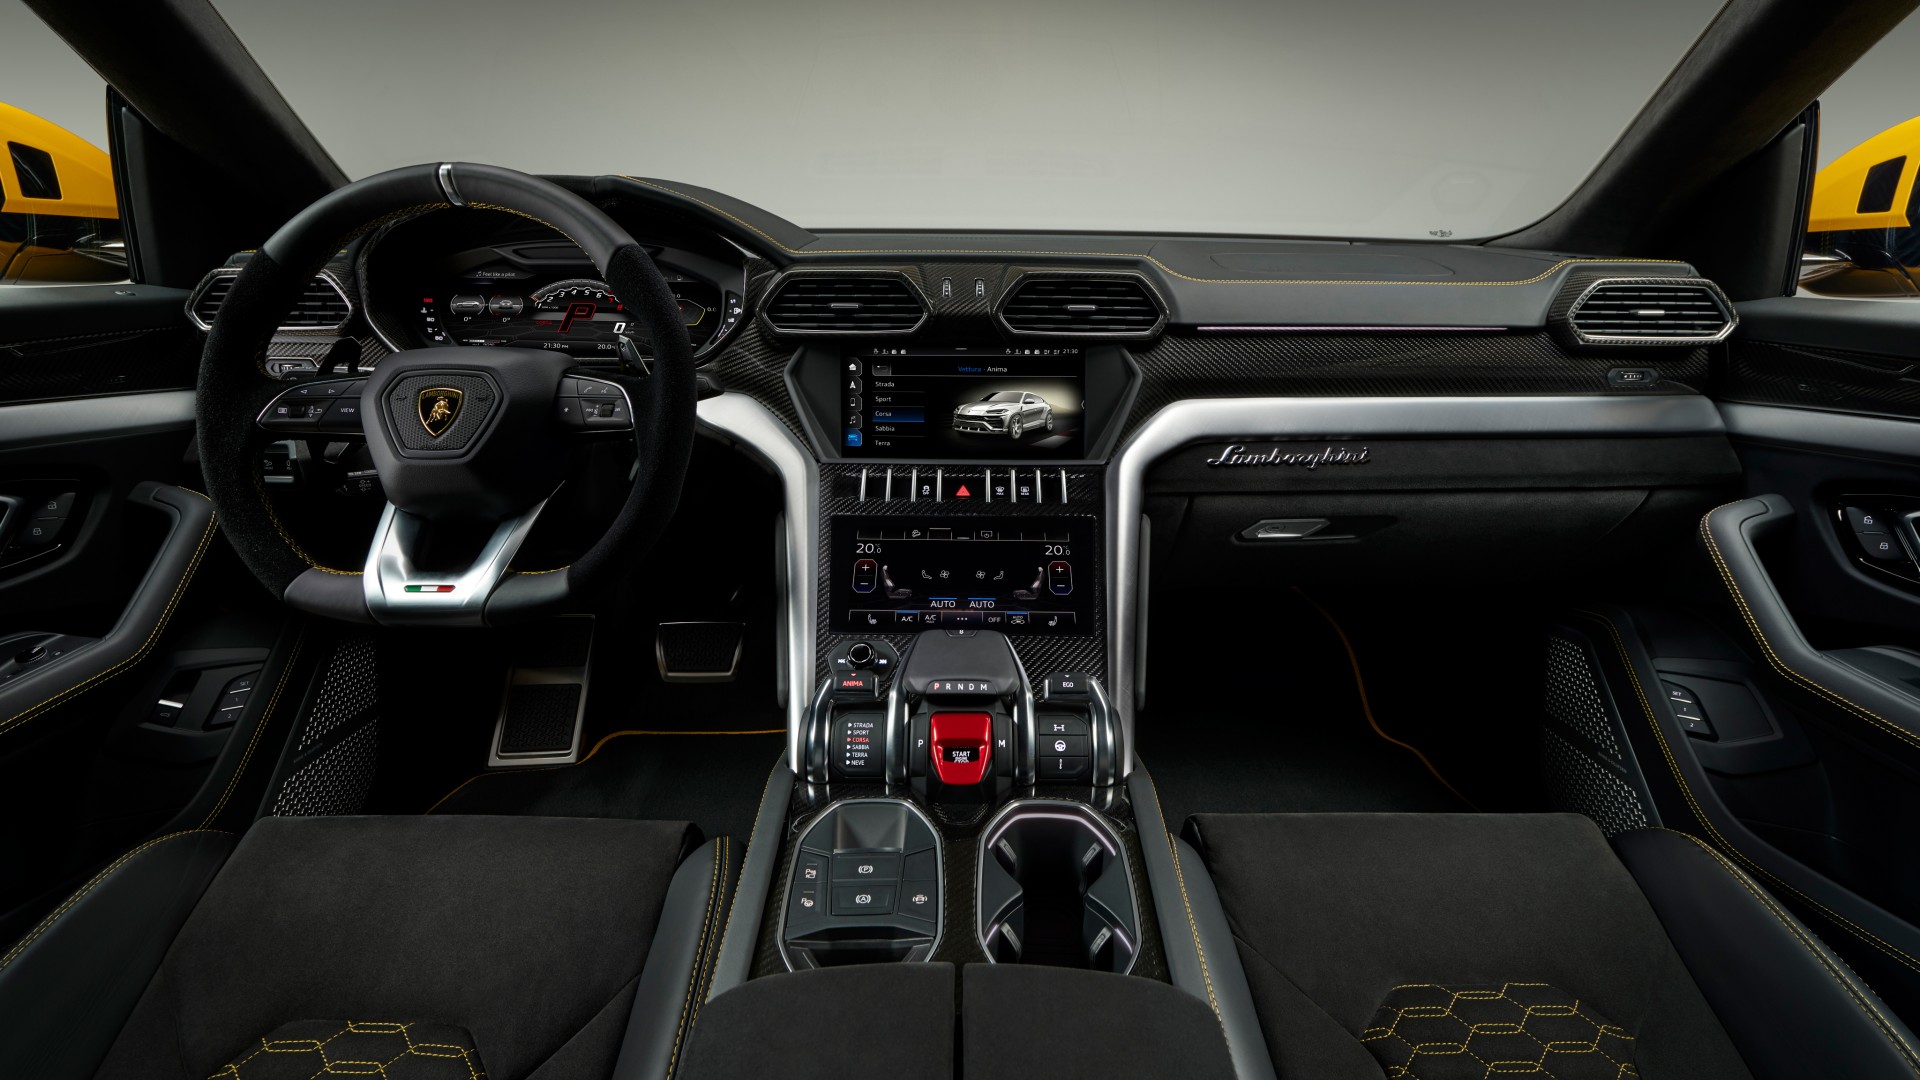 2018 Lamborghini Urus Interior 4K Wallpaper | HD Car Wallpapers | ID #9219